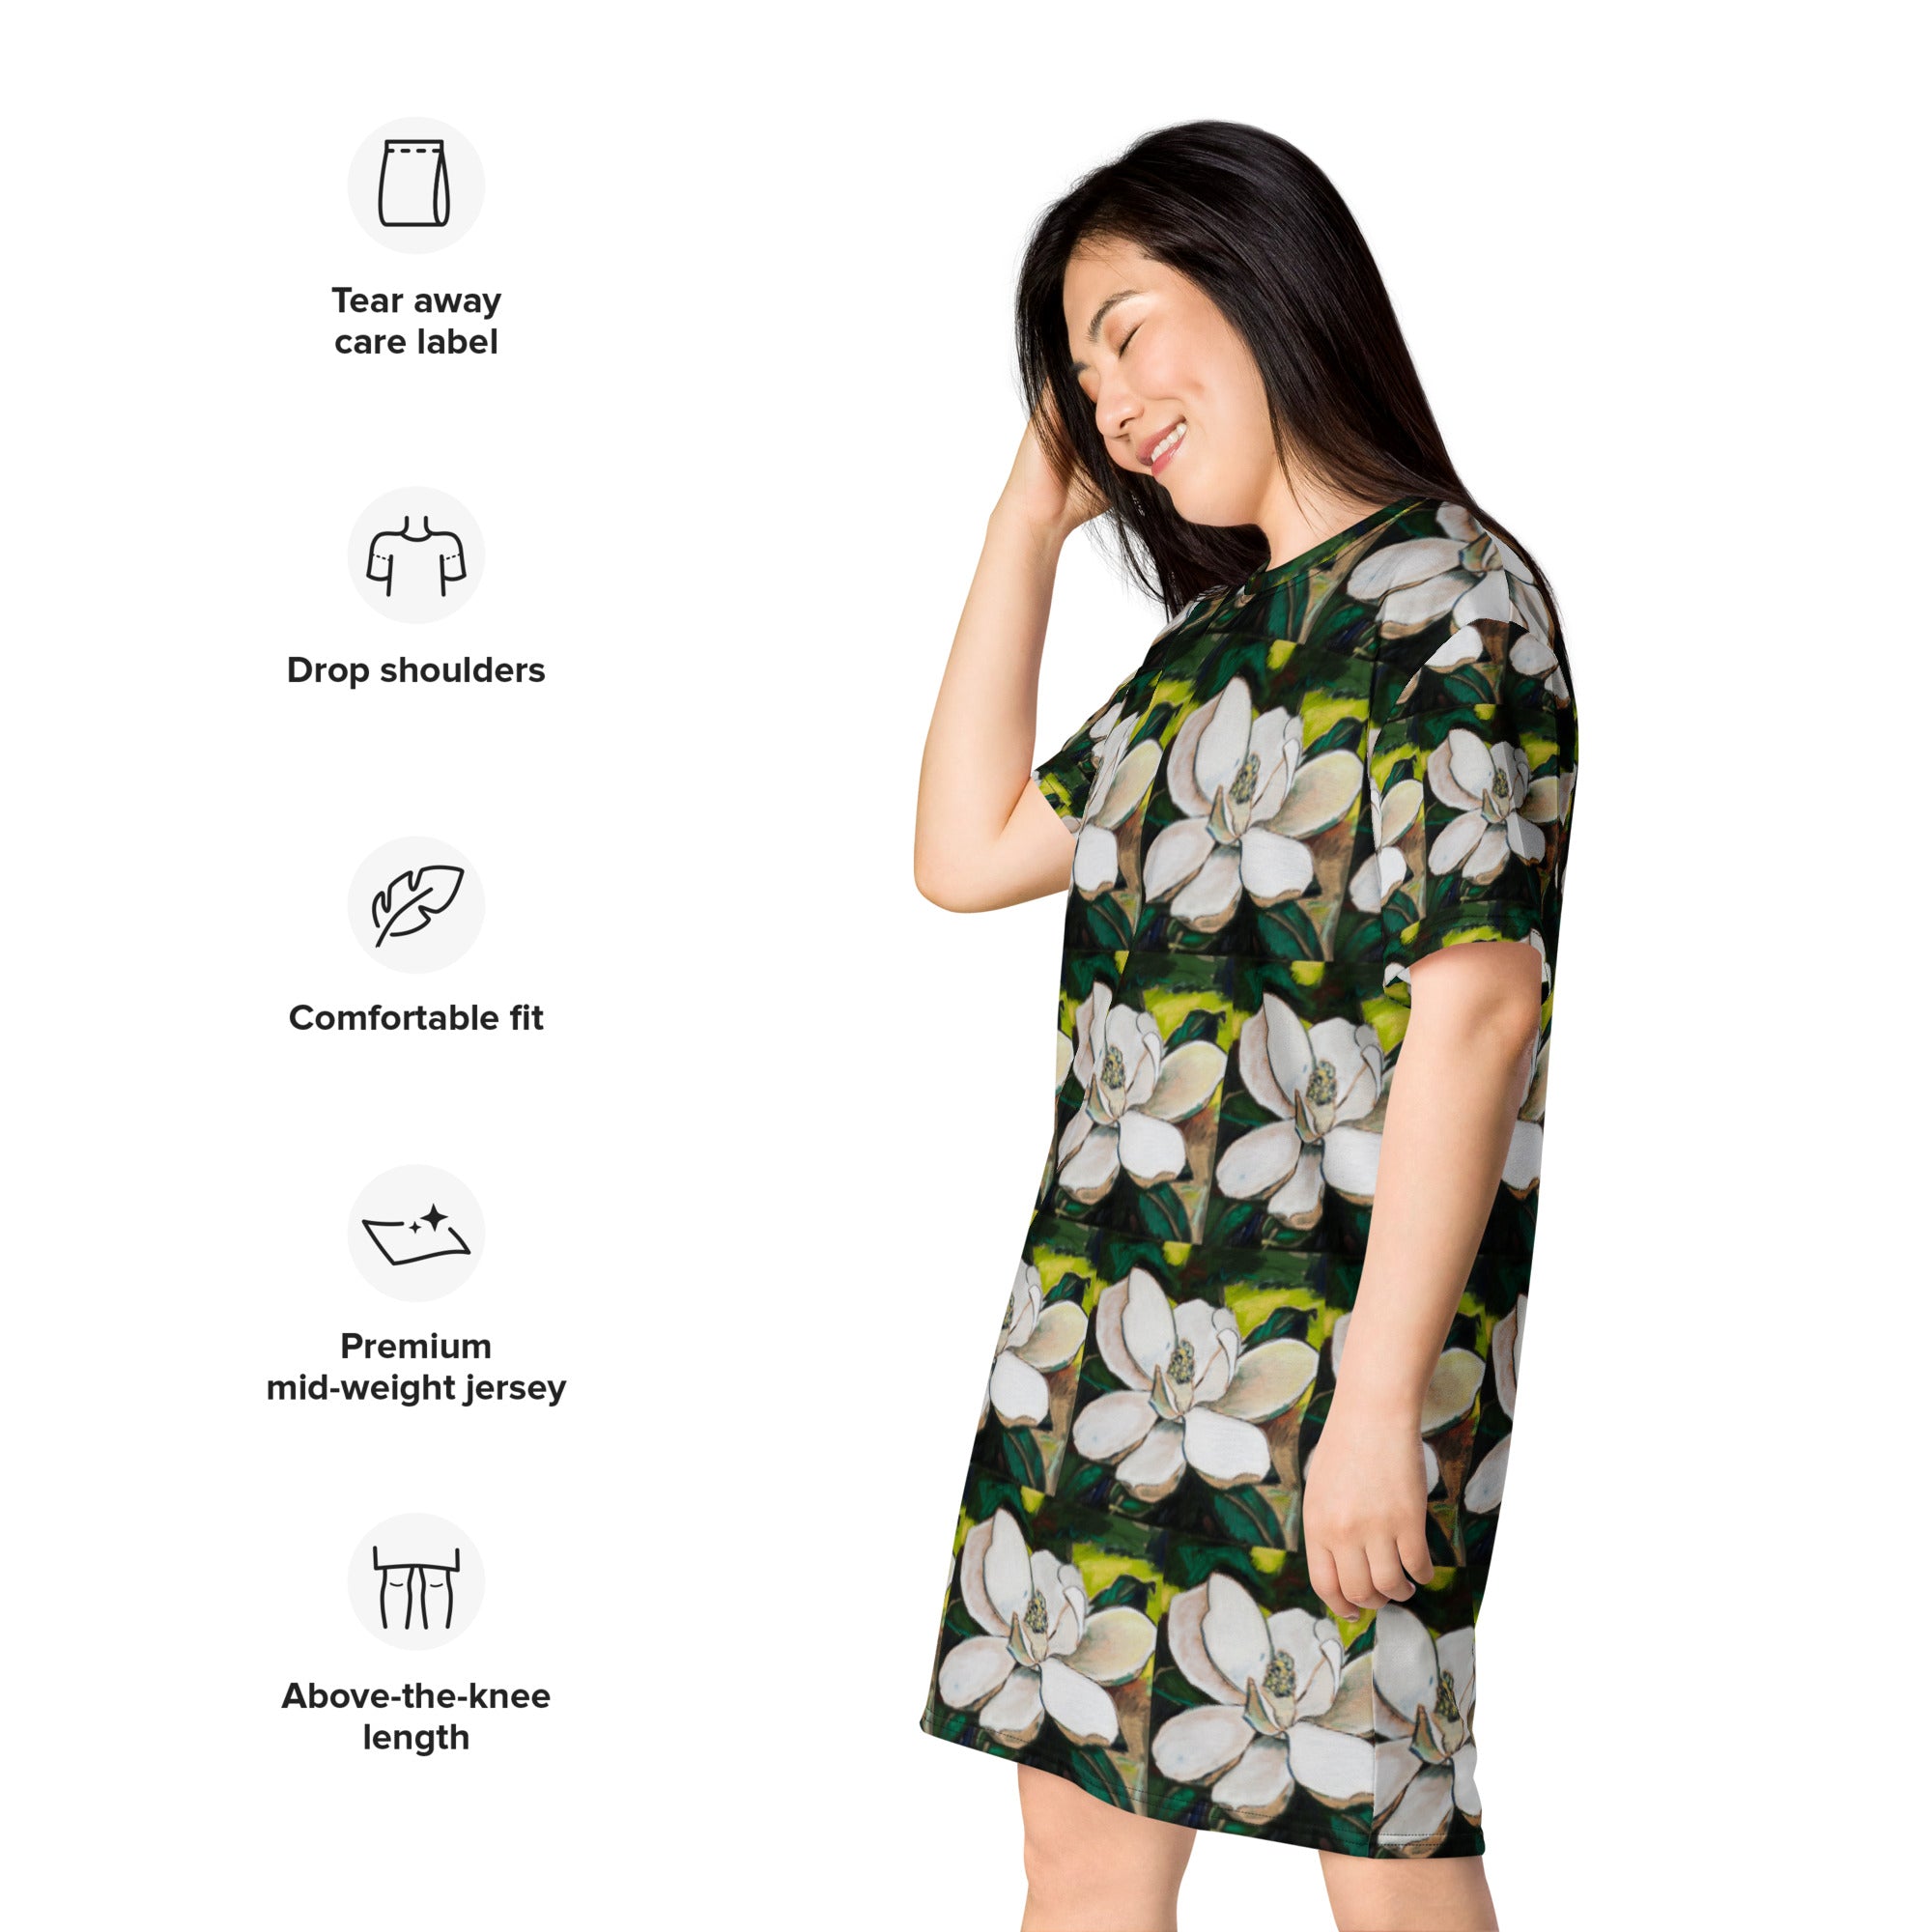 Share 240+ knee length shirt dress latest